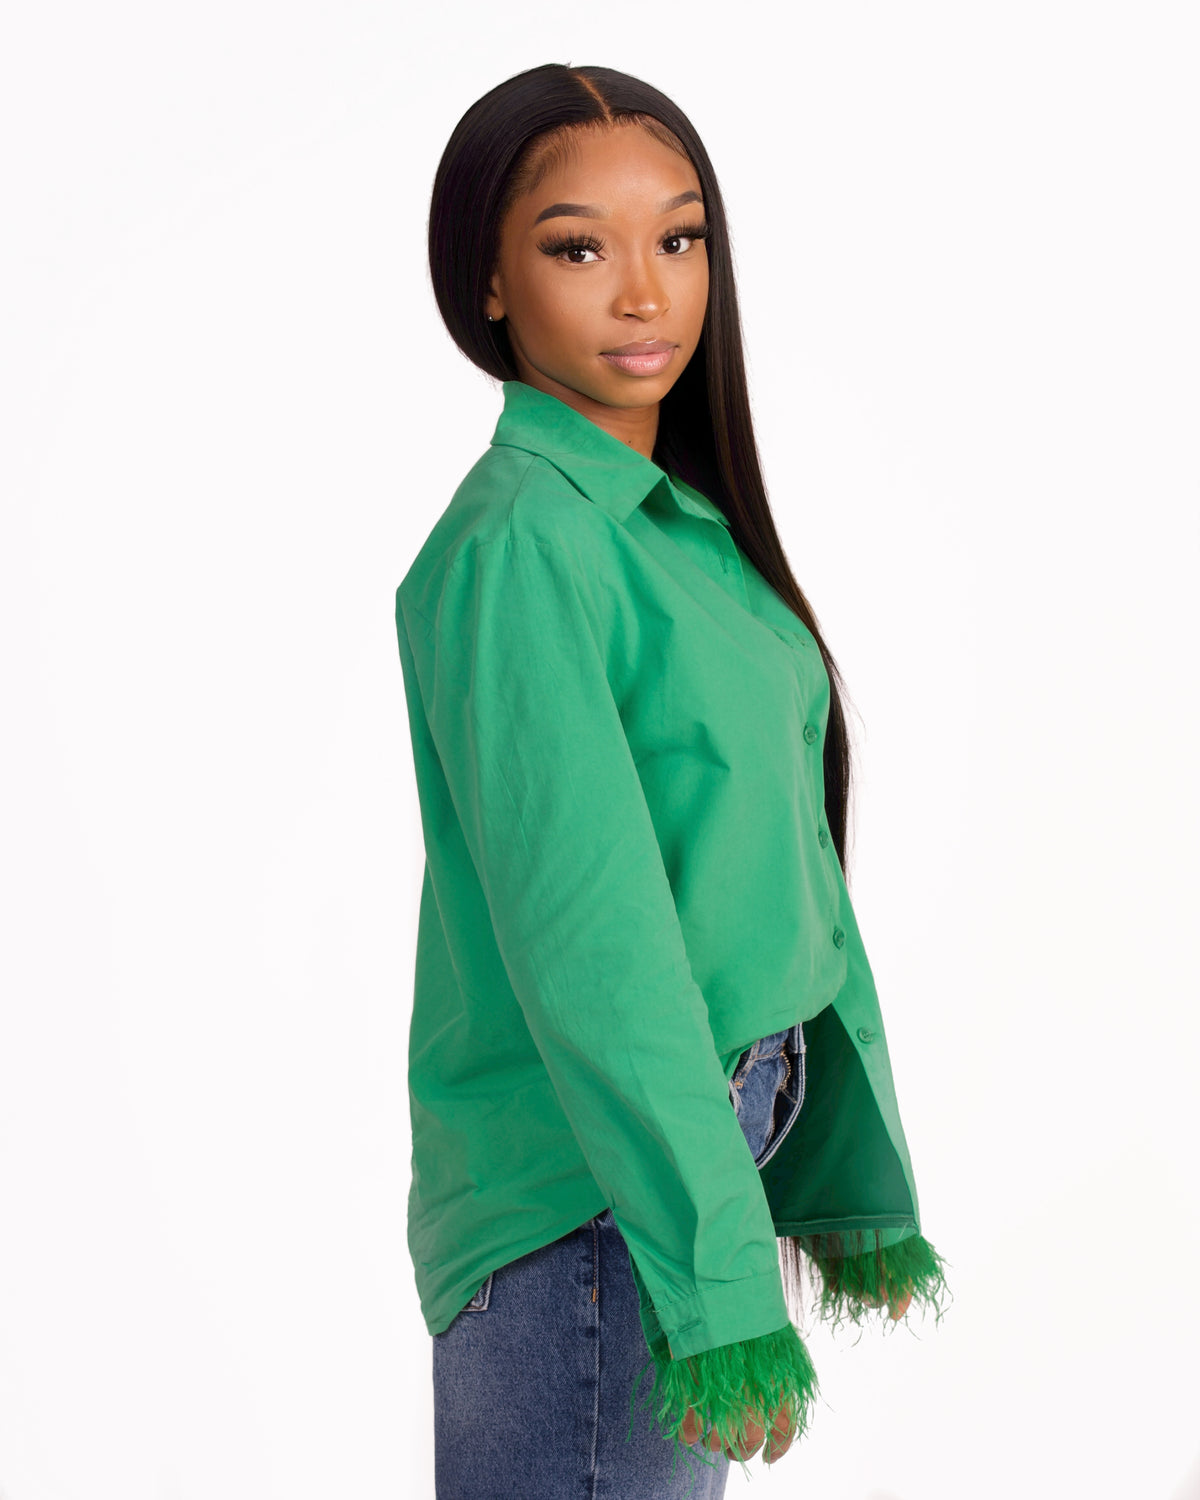 Sacha green top | green blouse | blouses | the girl wearing | green top  | groene blouse | groene top 